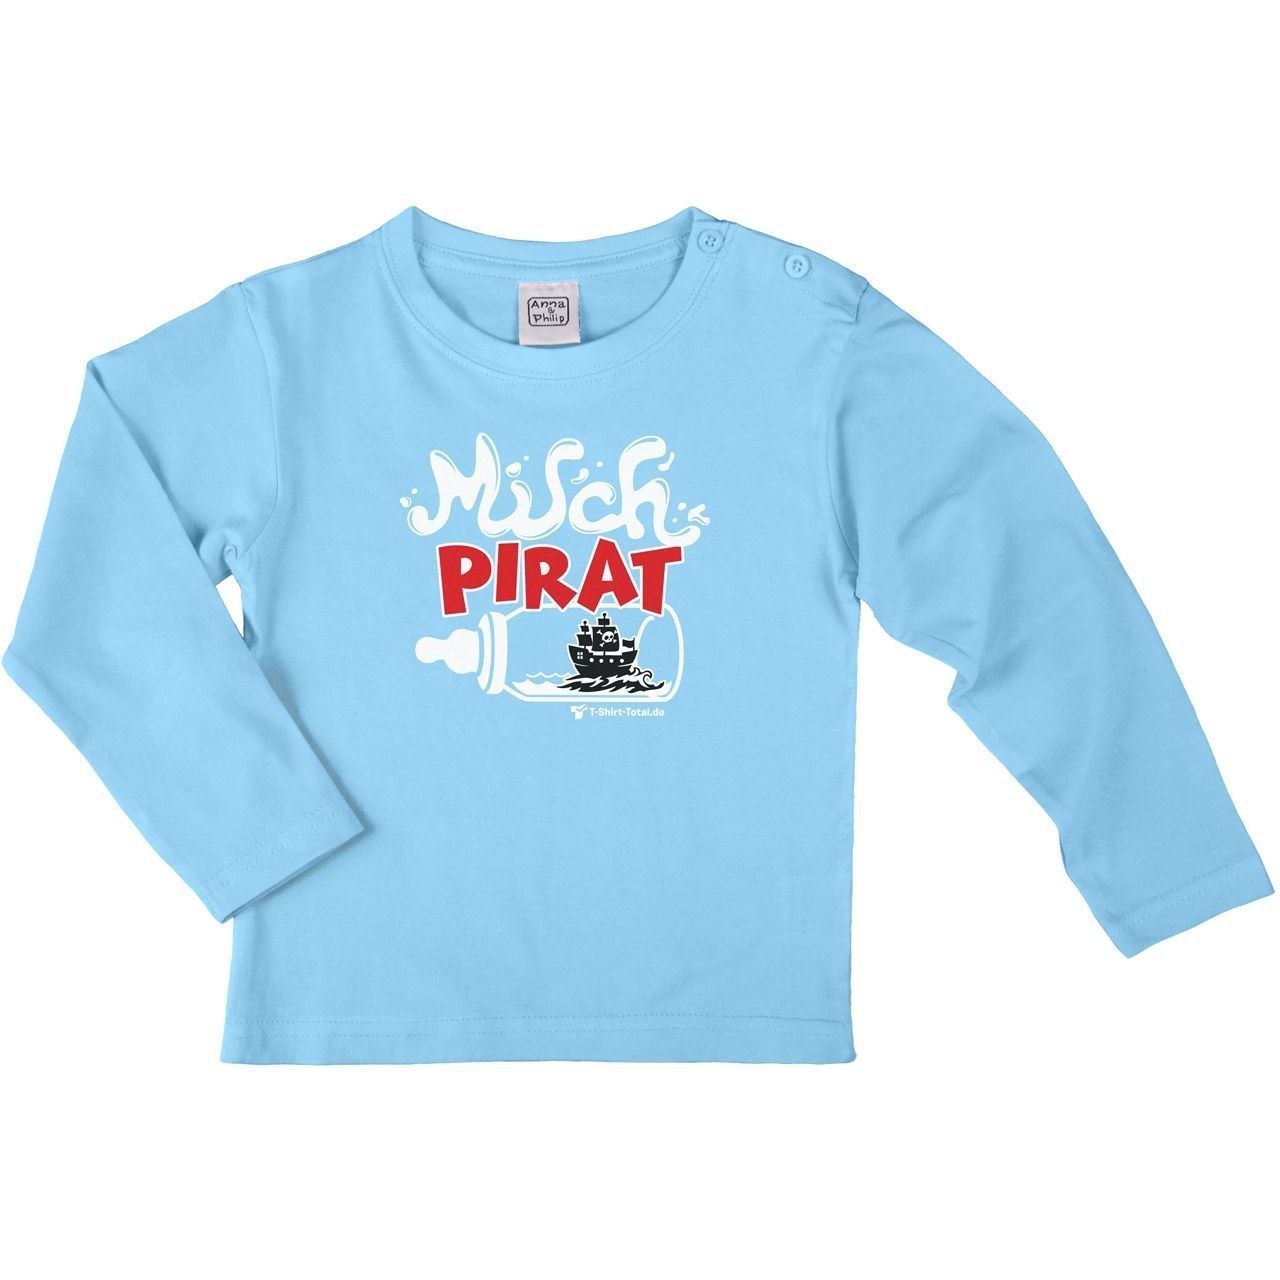 Milch Pirat Kinder Langarm Shirt hellblau 104